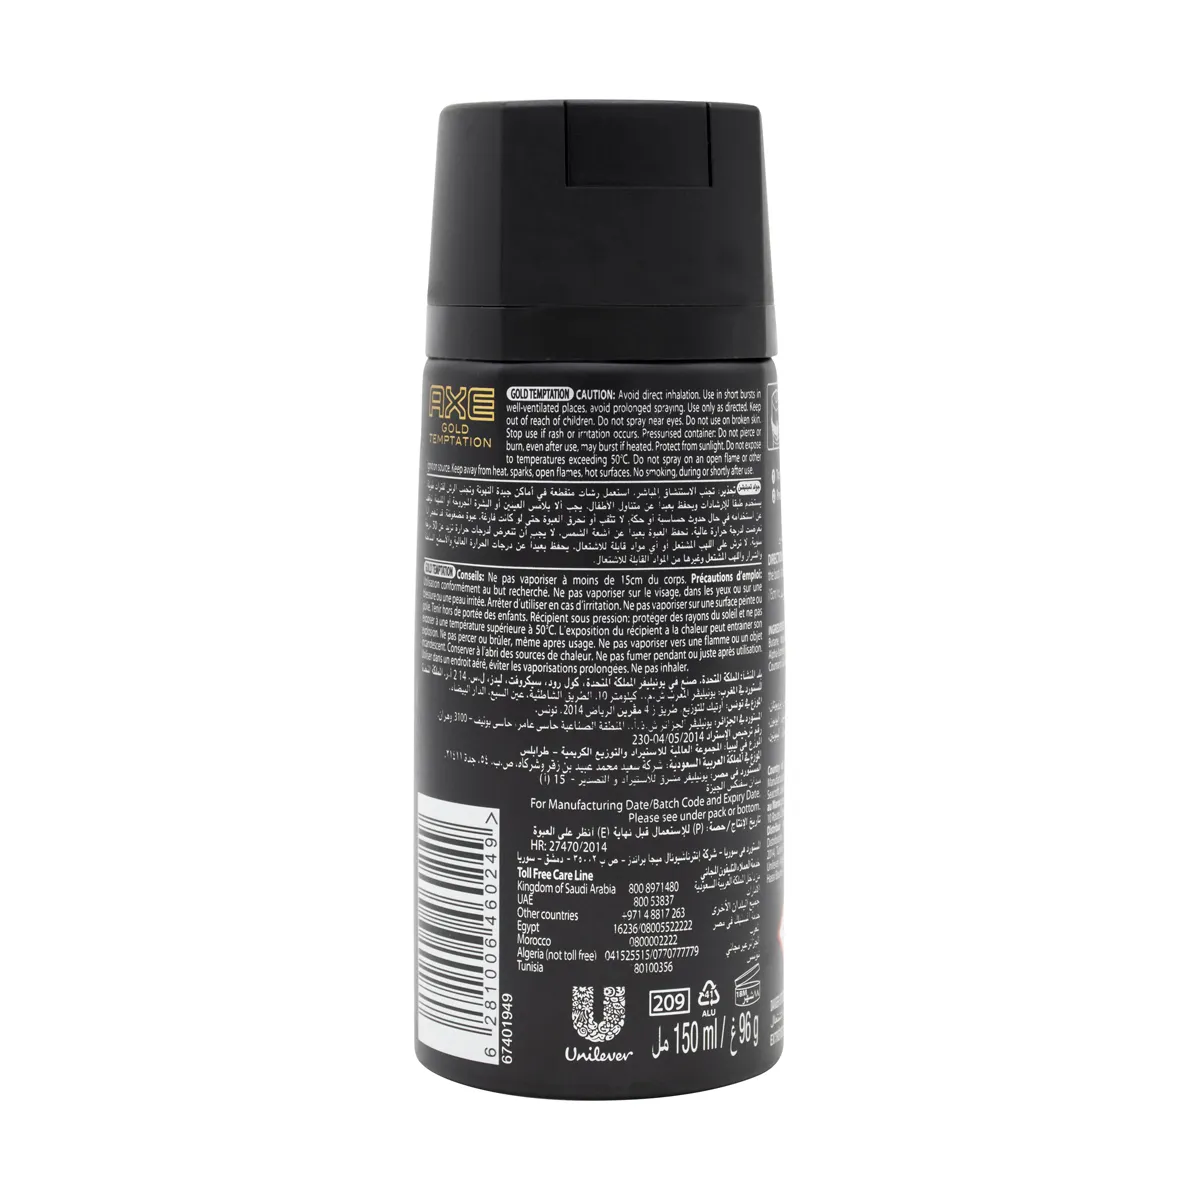 Gold Temptation Deodorant Spray 150Ml